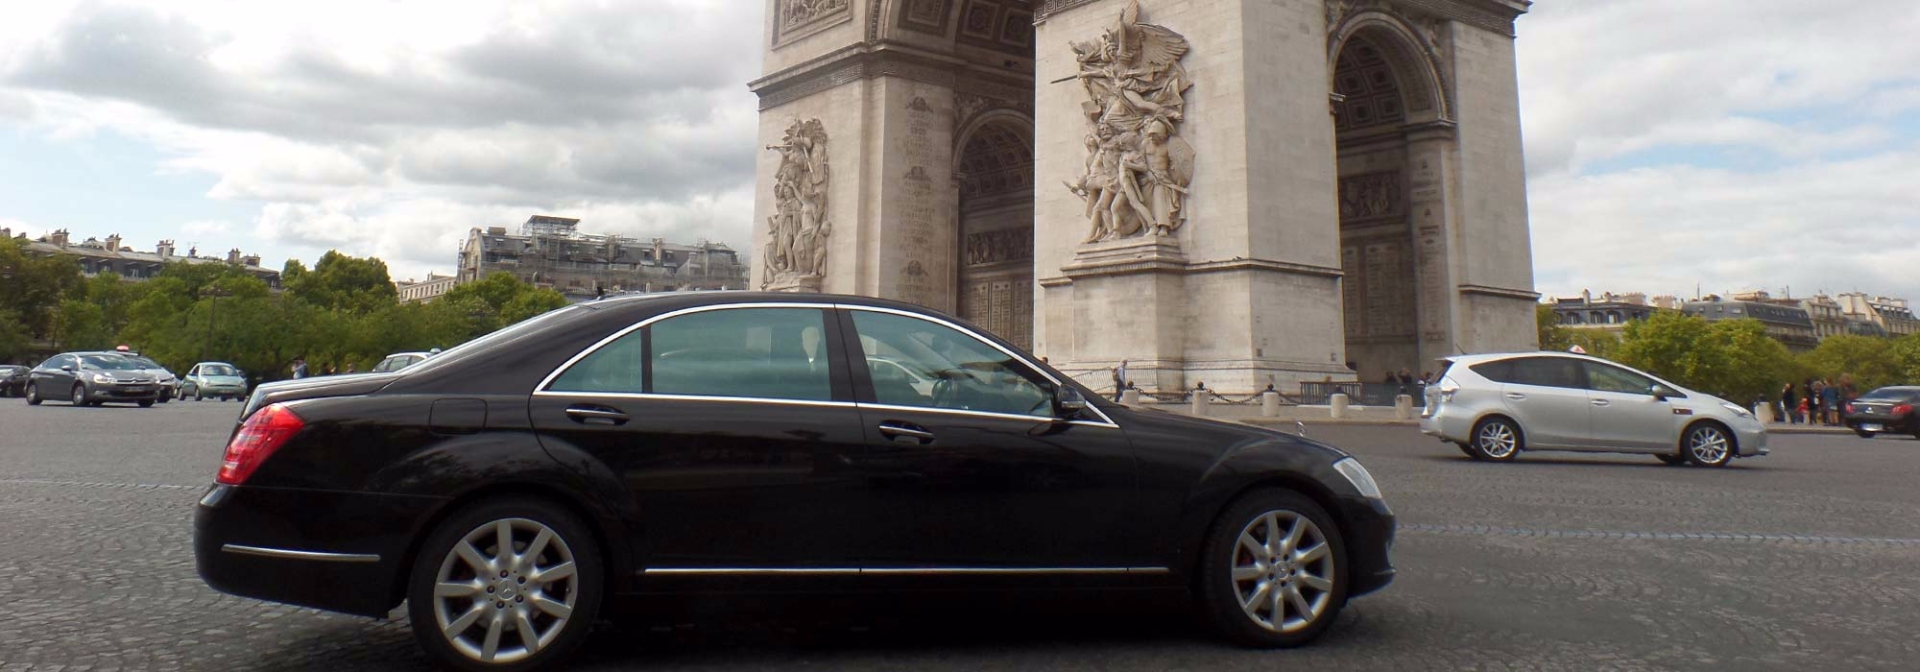 paris-limousine.jpg